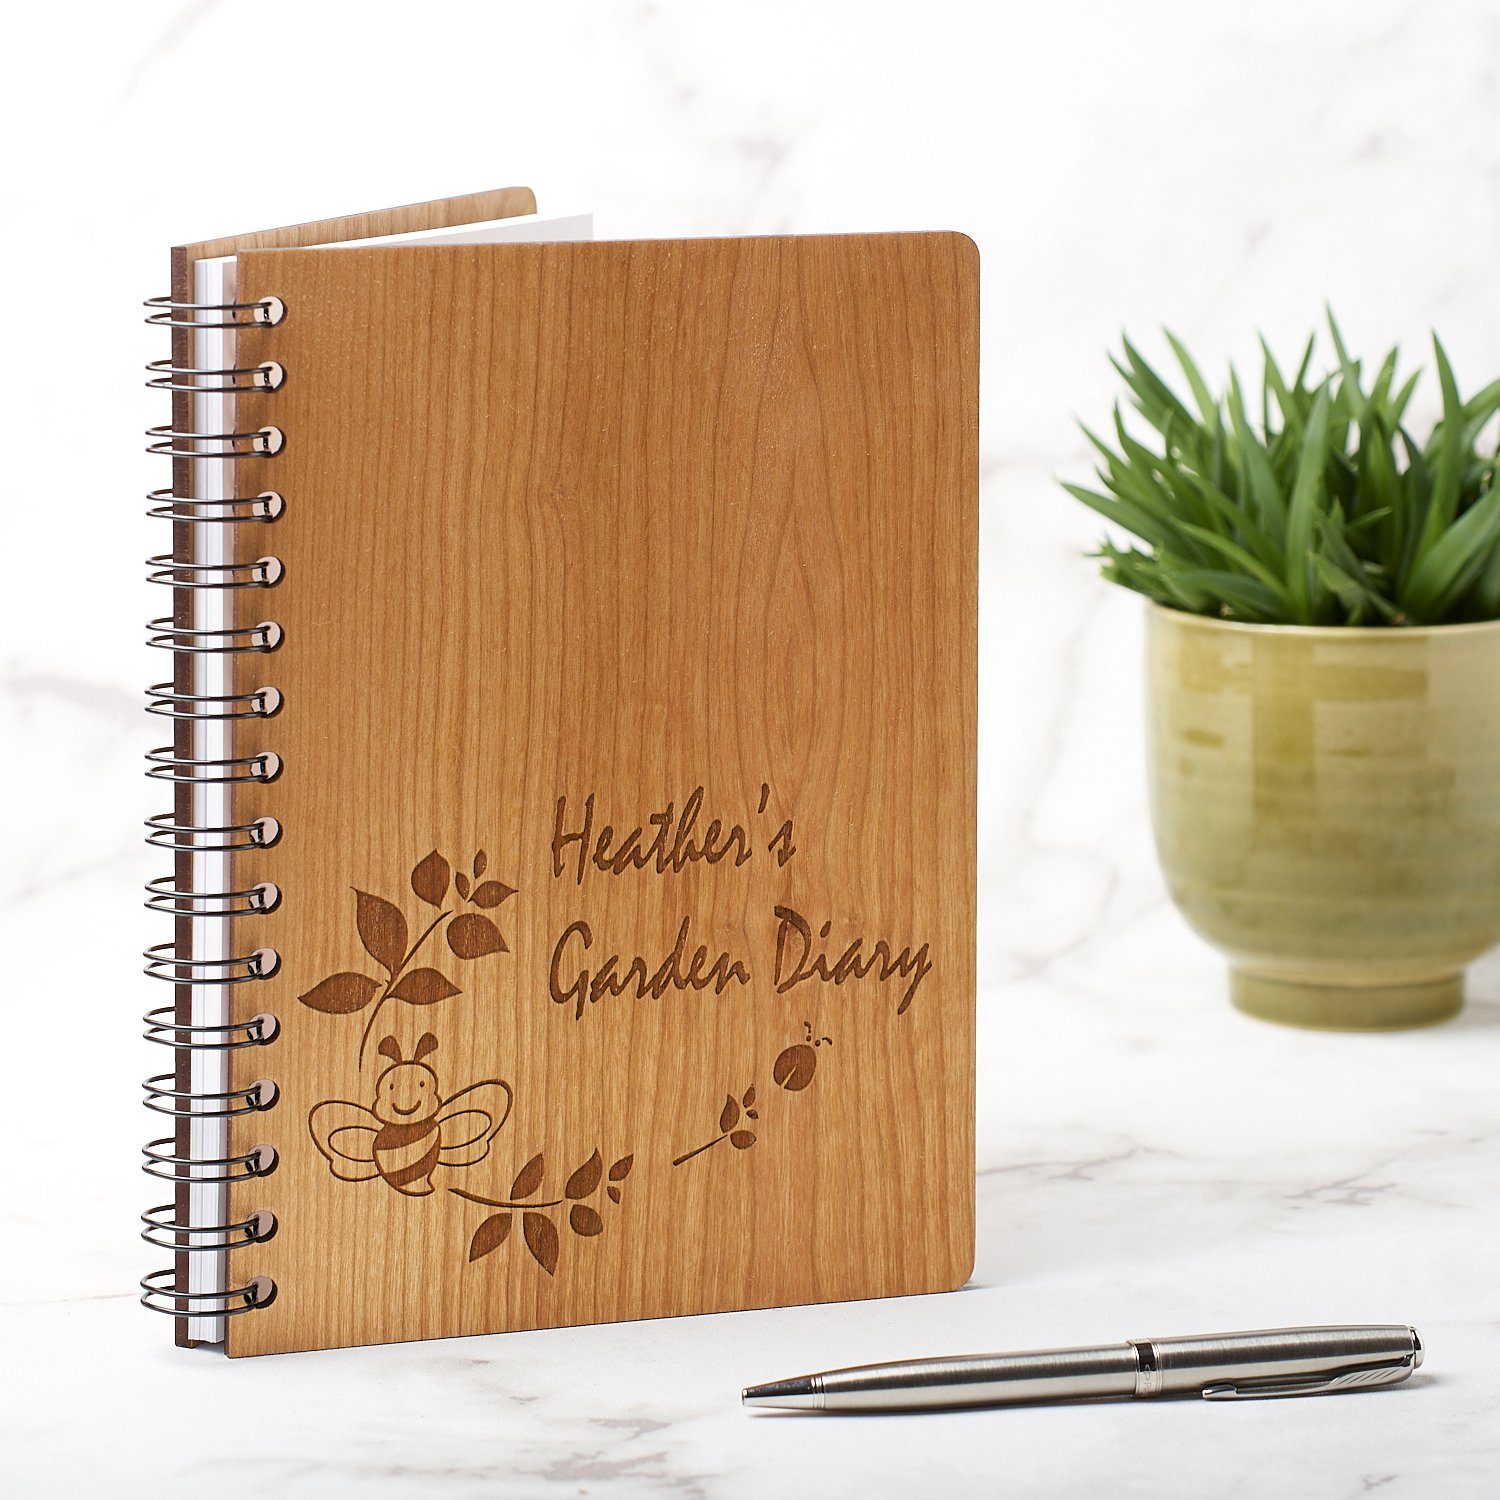 Notebook Planner - Personalised A5 Gardening Note Book, Journal, Planner - Bee Design